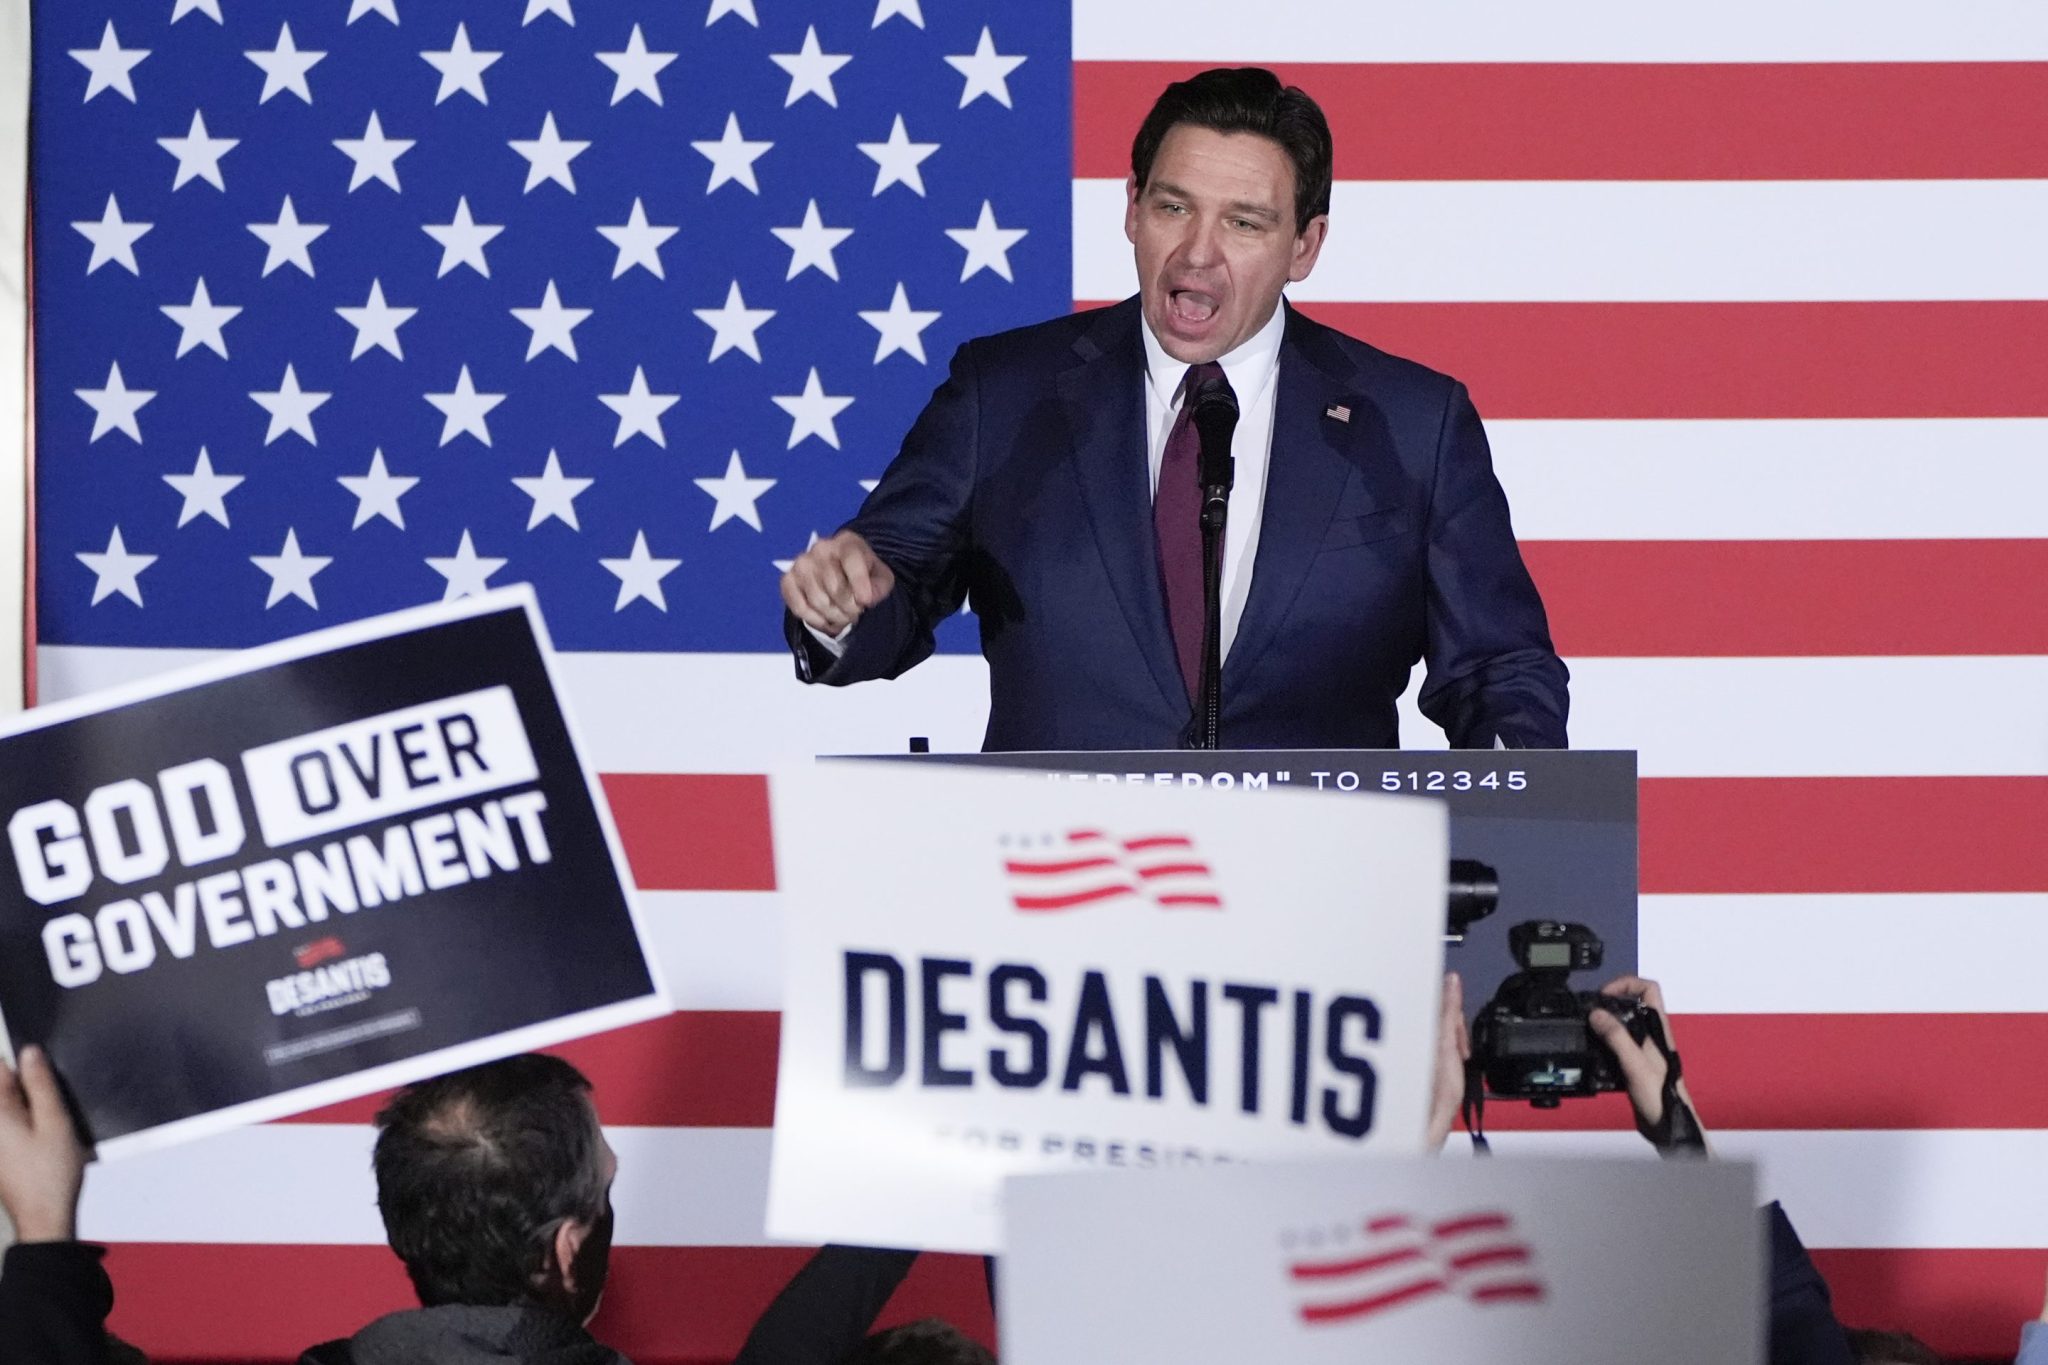 Ron DeSantis ends presidential bid before New Hampshire